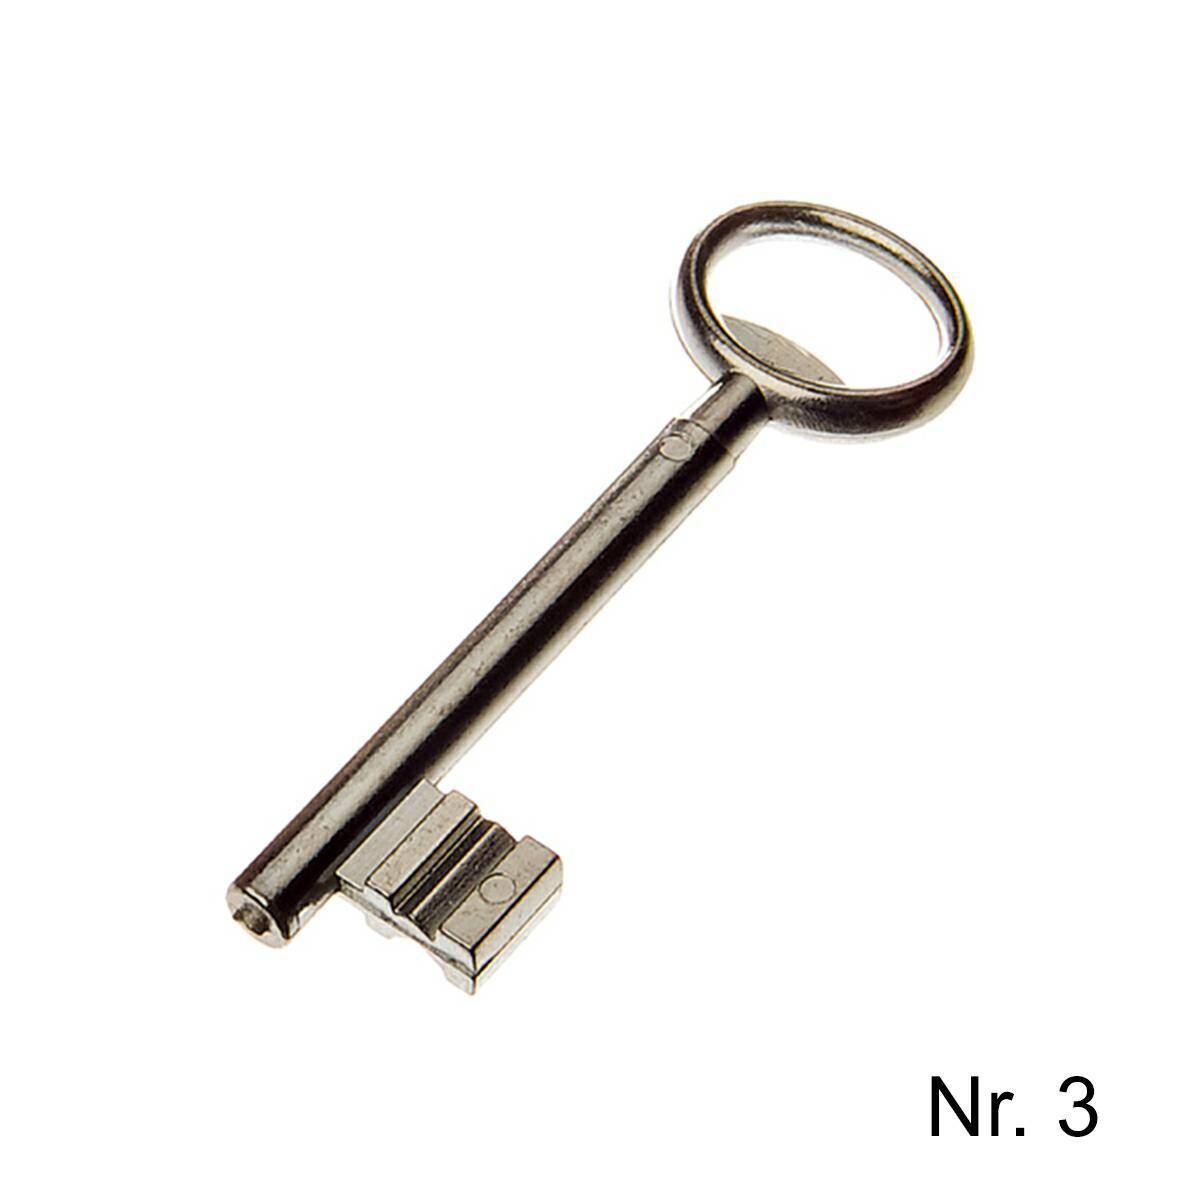 Cast key Jania for the lock - No. 3